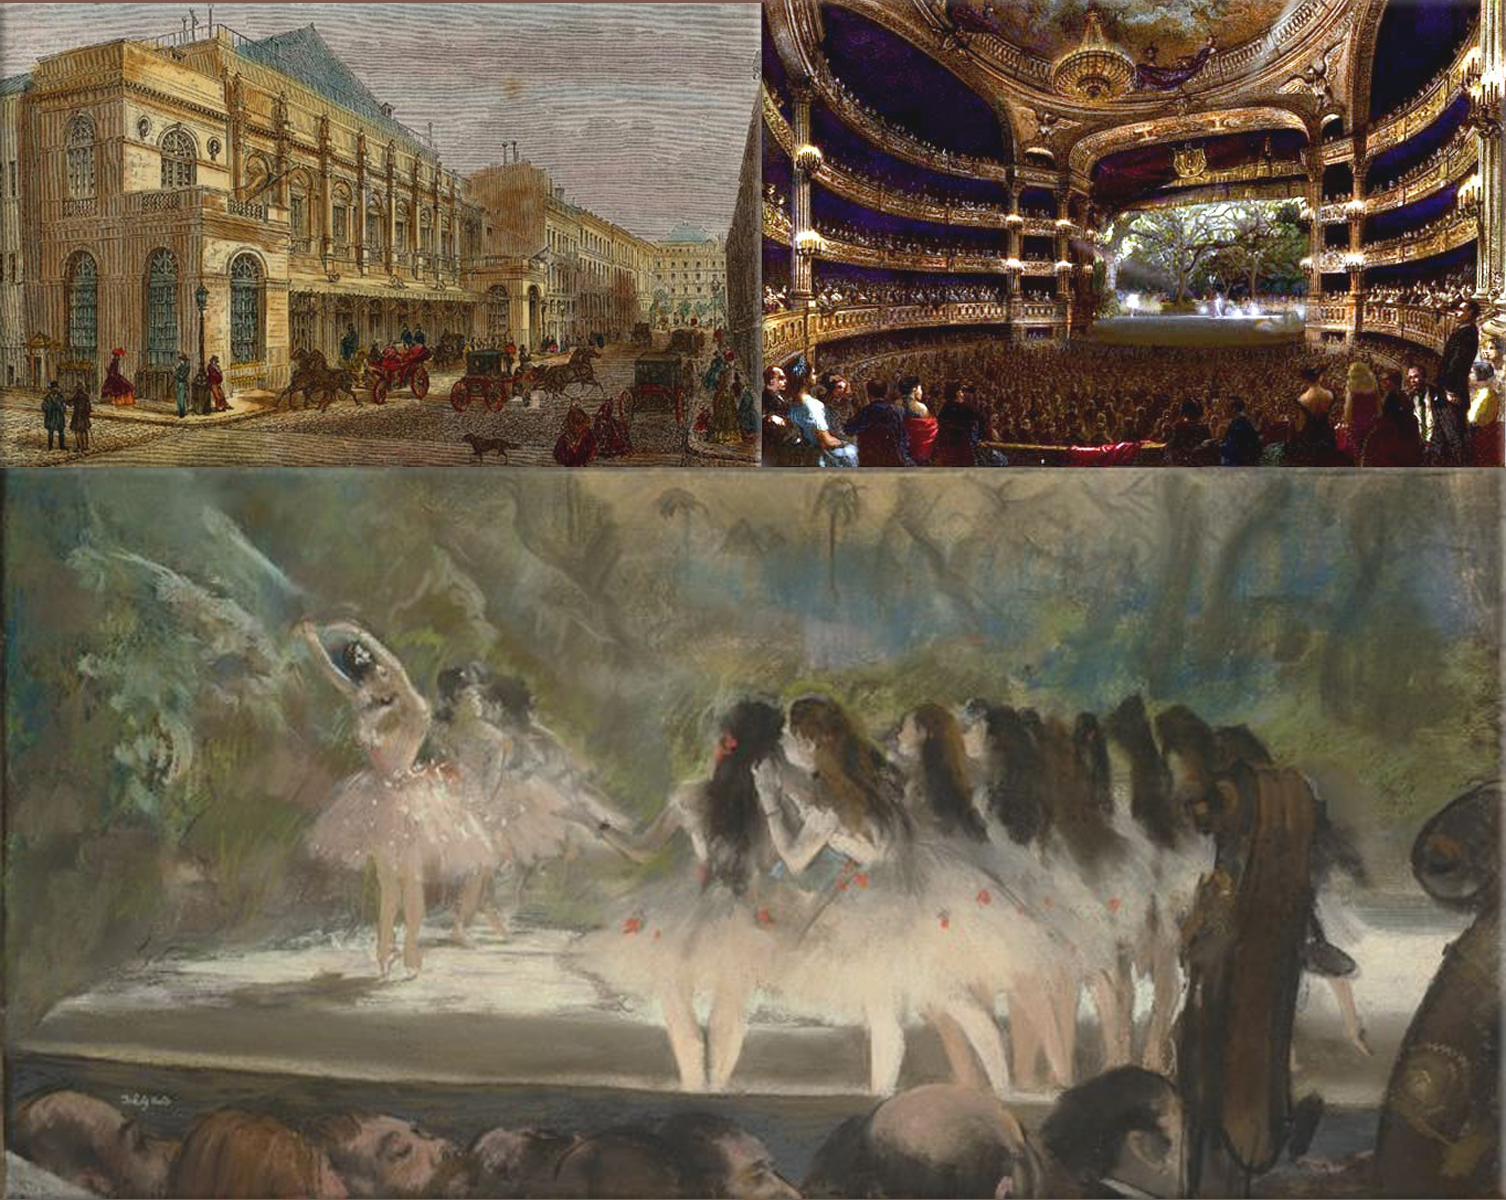 The Paris Opera Ballet premieres Giselle in the Salle Le Peletier on June 28th, 1841.